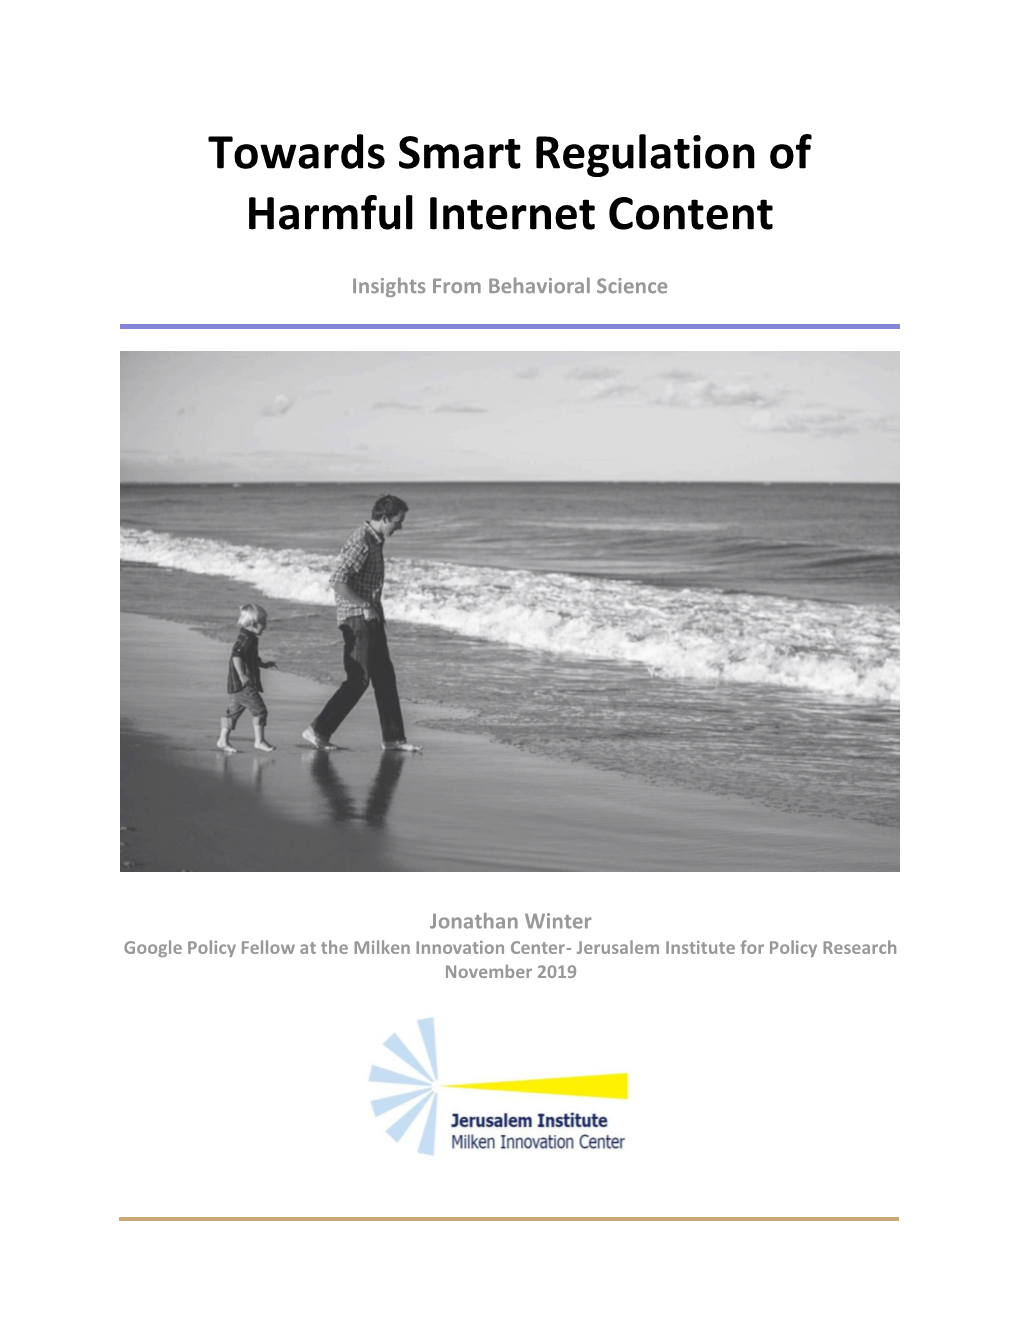 Towards Smart Regulation of Harmful Internet Content